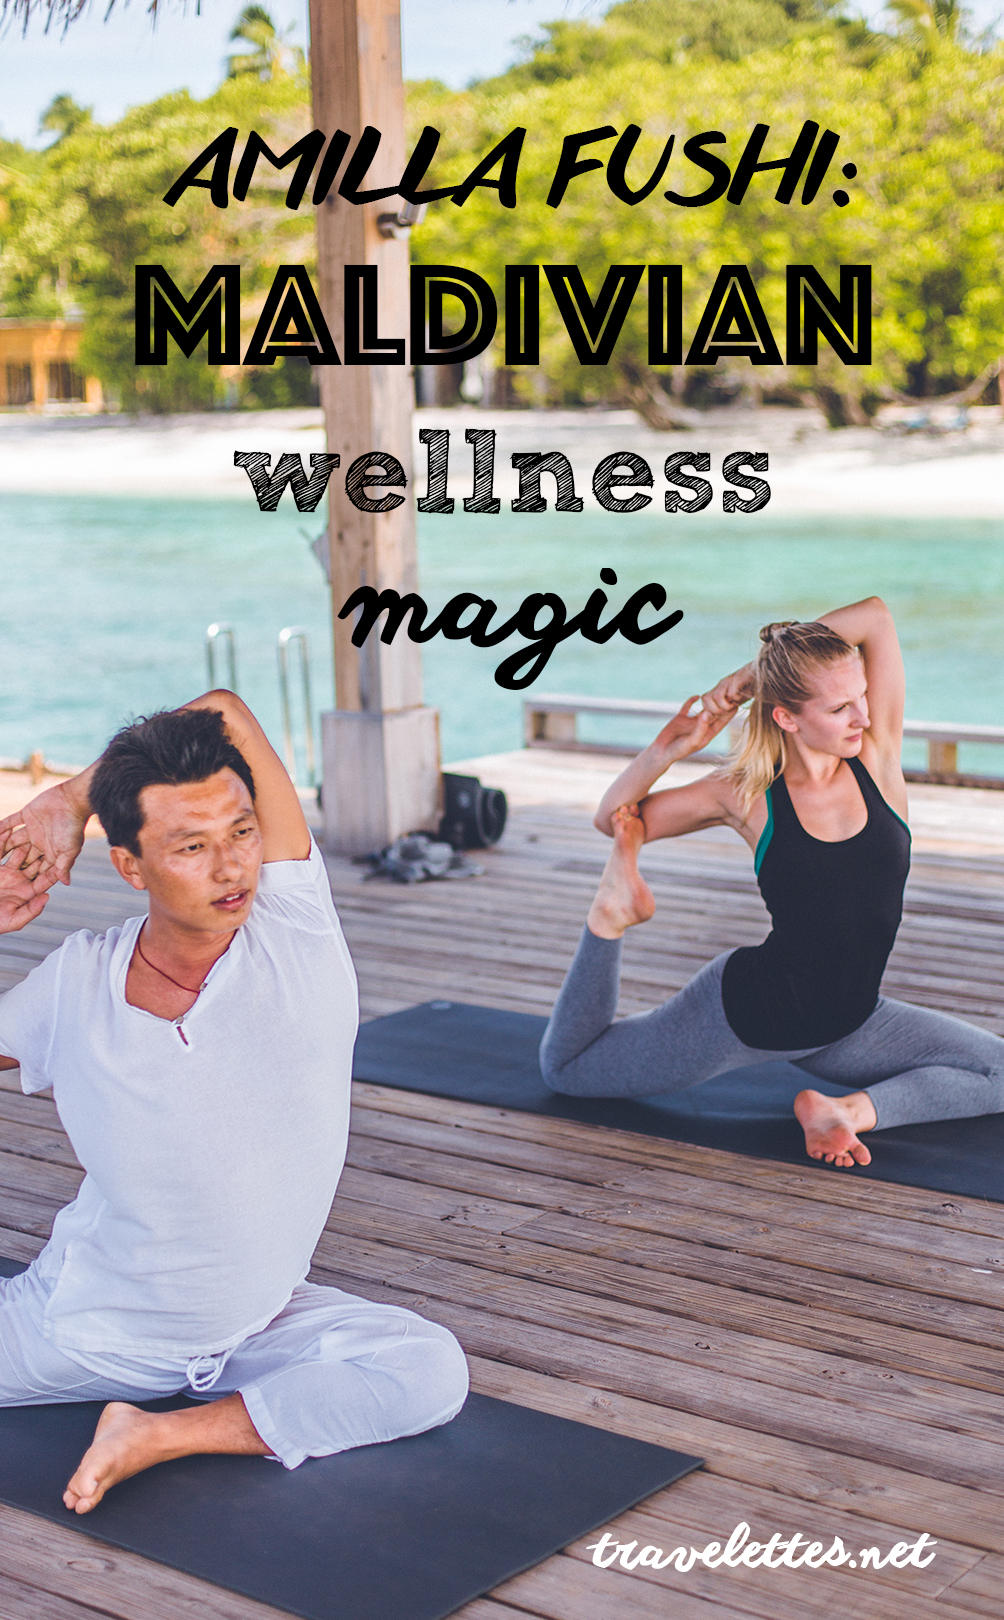 Amilla Fushi – Maldivian Wellness Magic